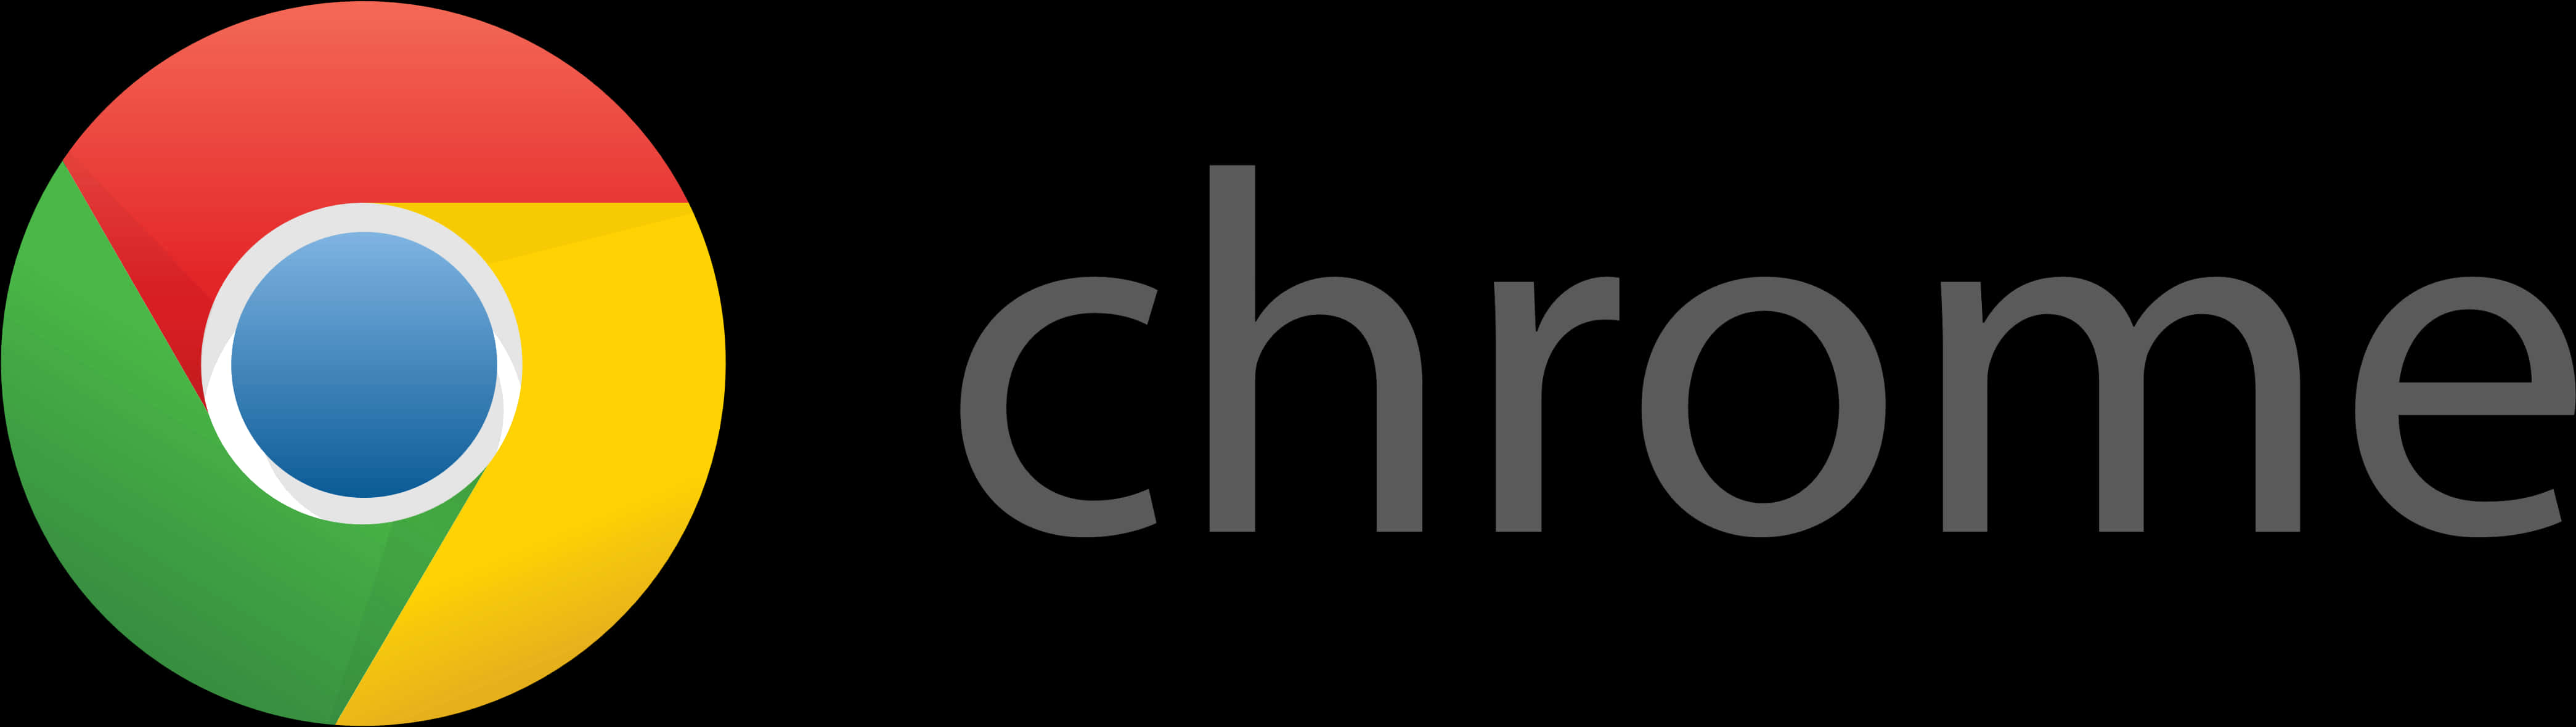 Google Chrome Logo PNG image